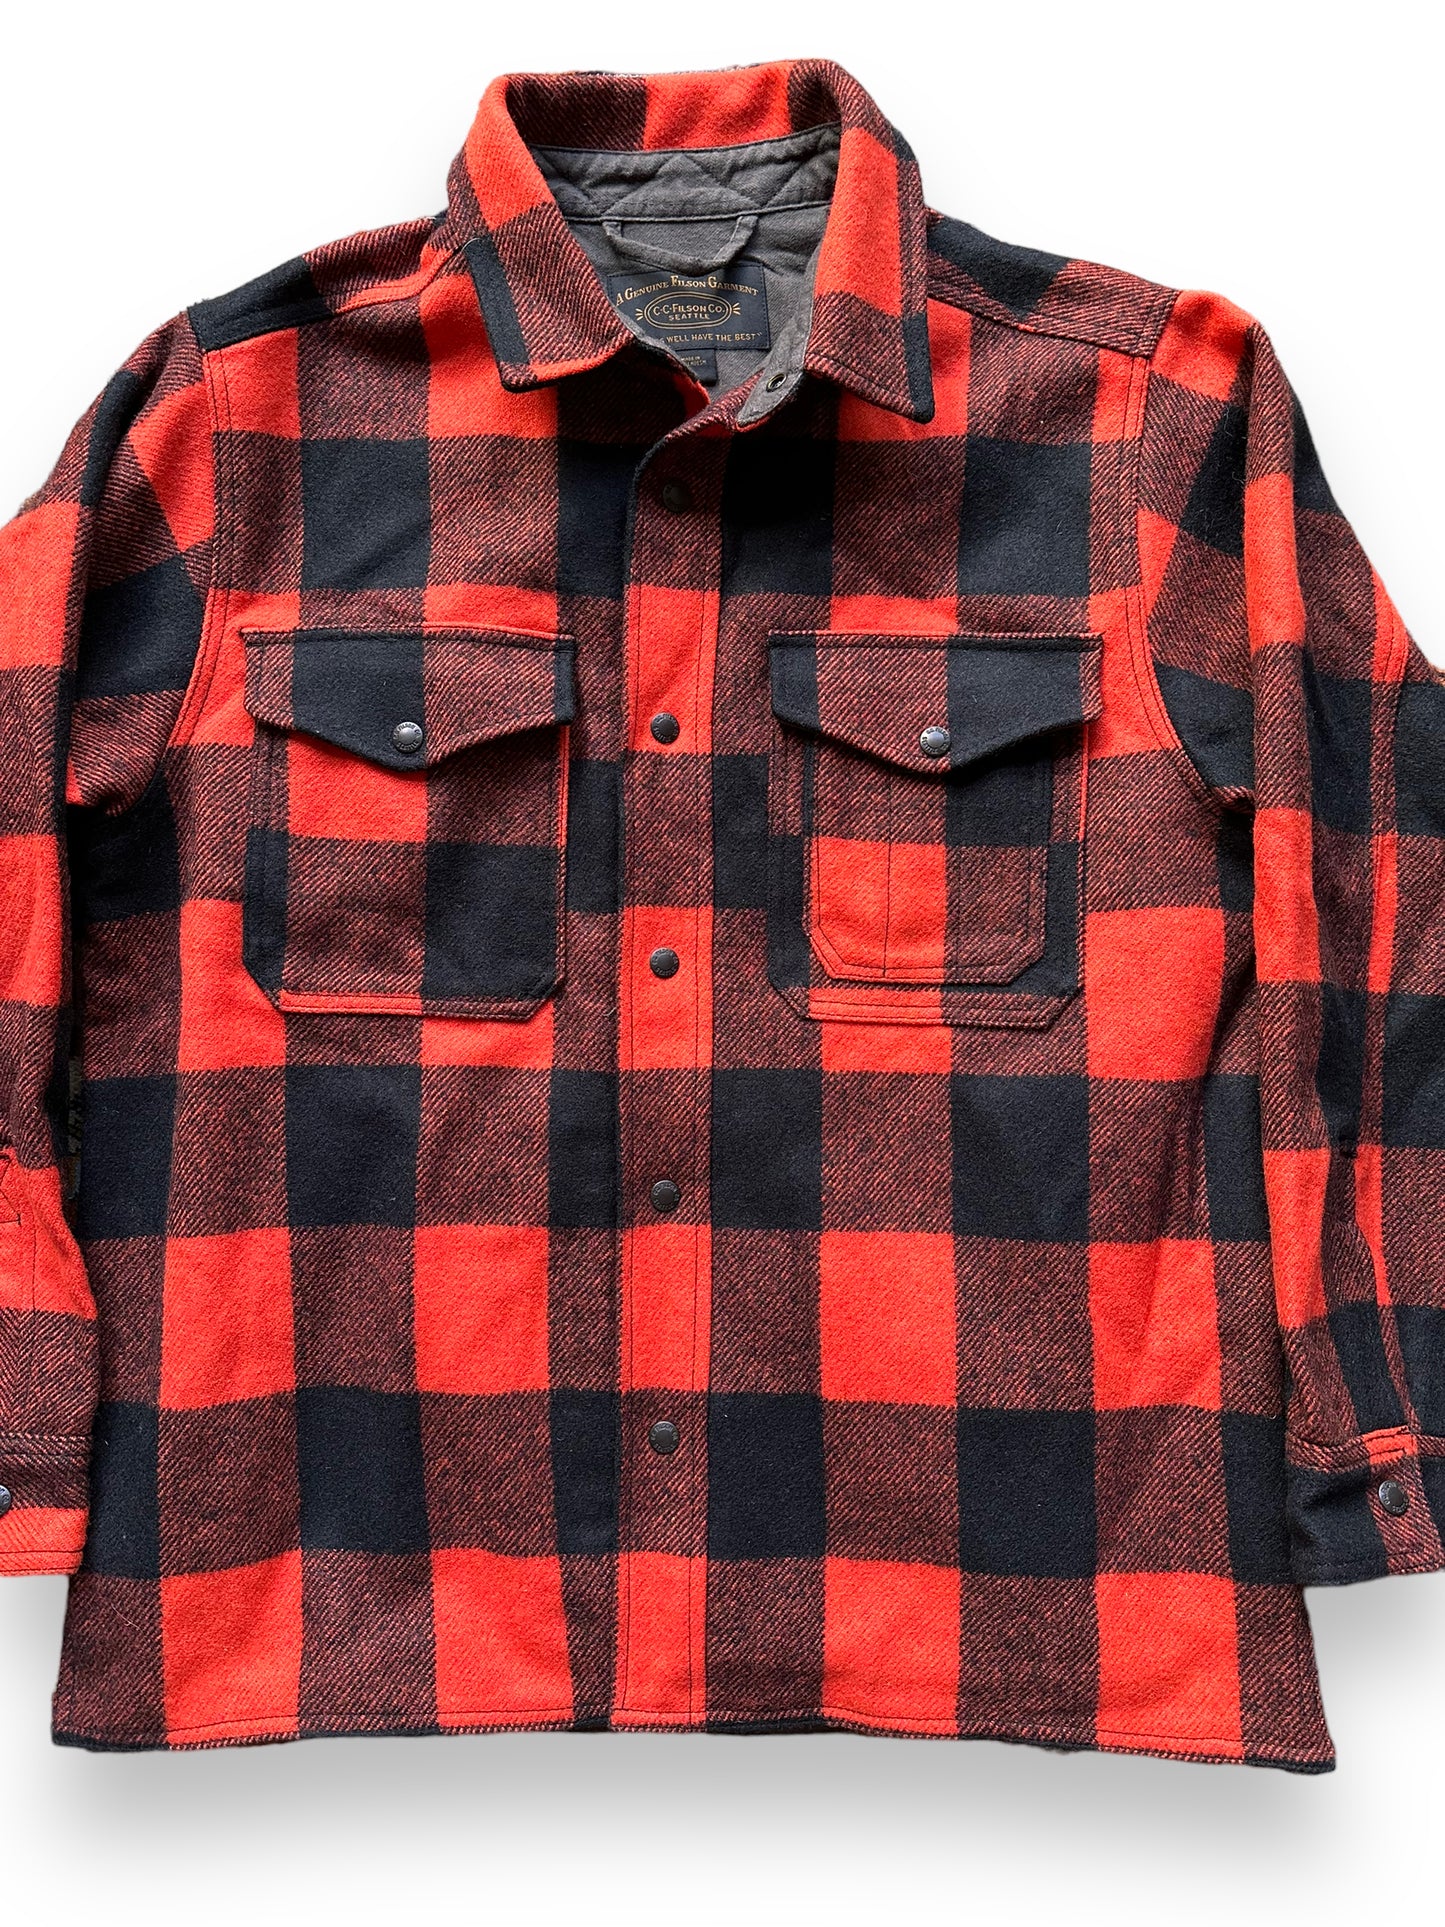 Front Detail on Filson Black Blaze Mackinaw Lined Jac Shirt SZ M |  Barn Owl Vintage Goods | Vintage Filson Workwear Seattle